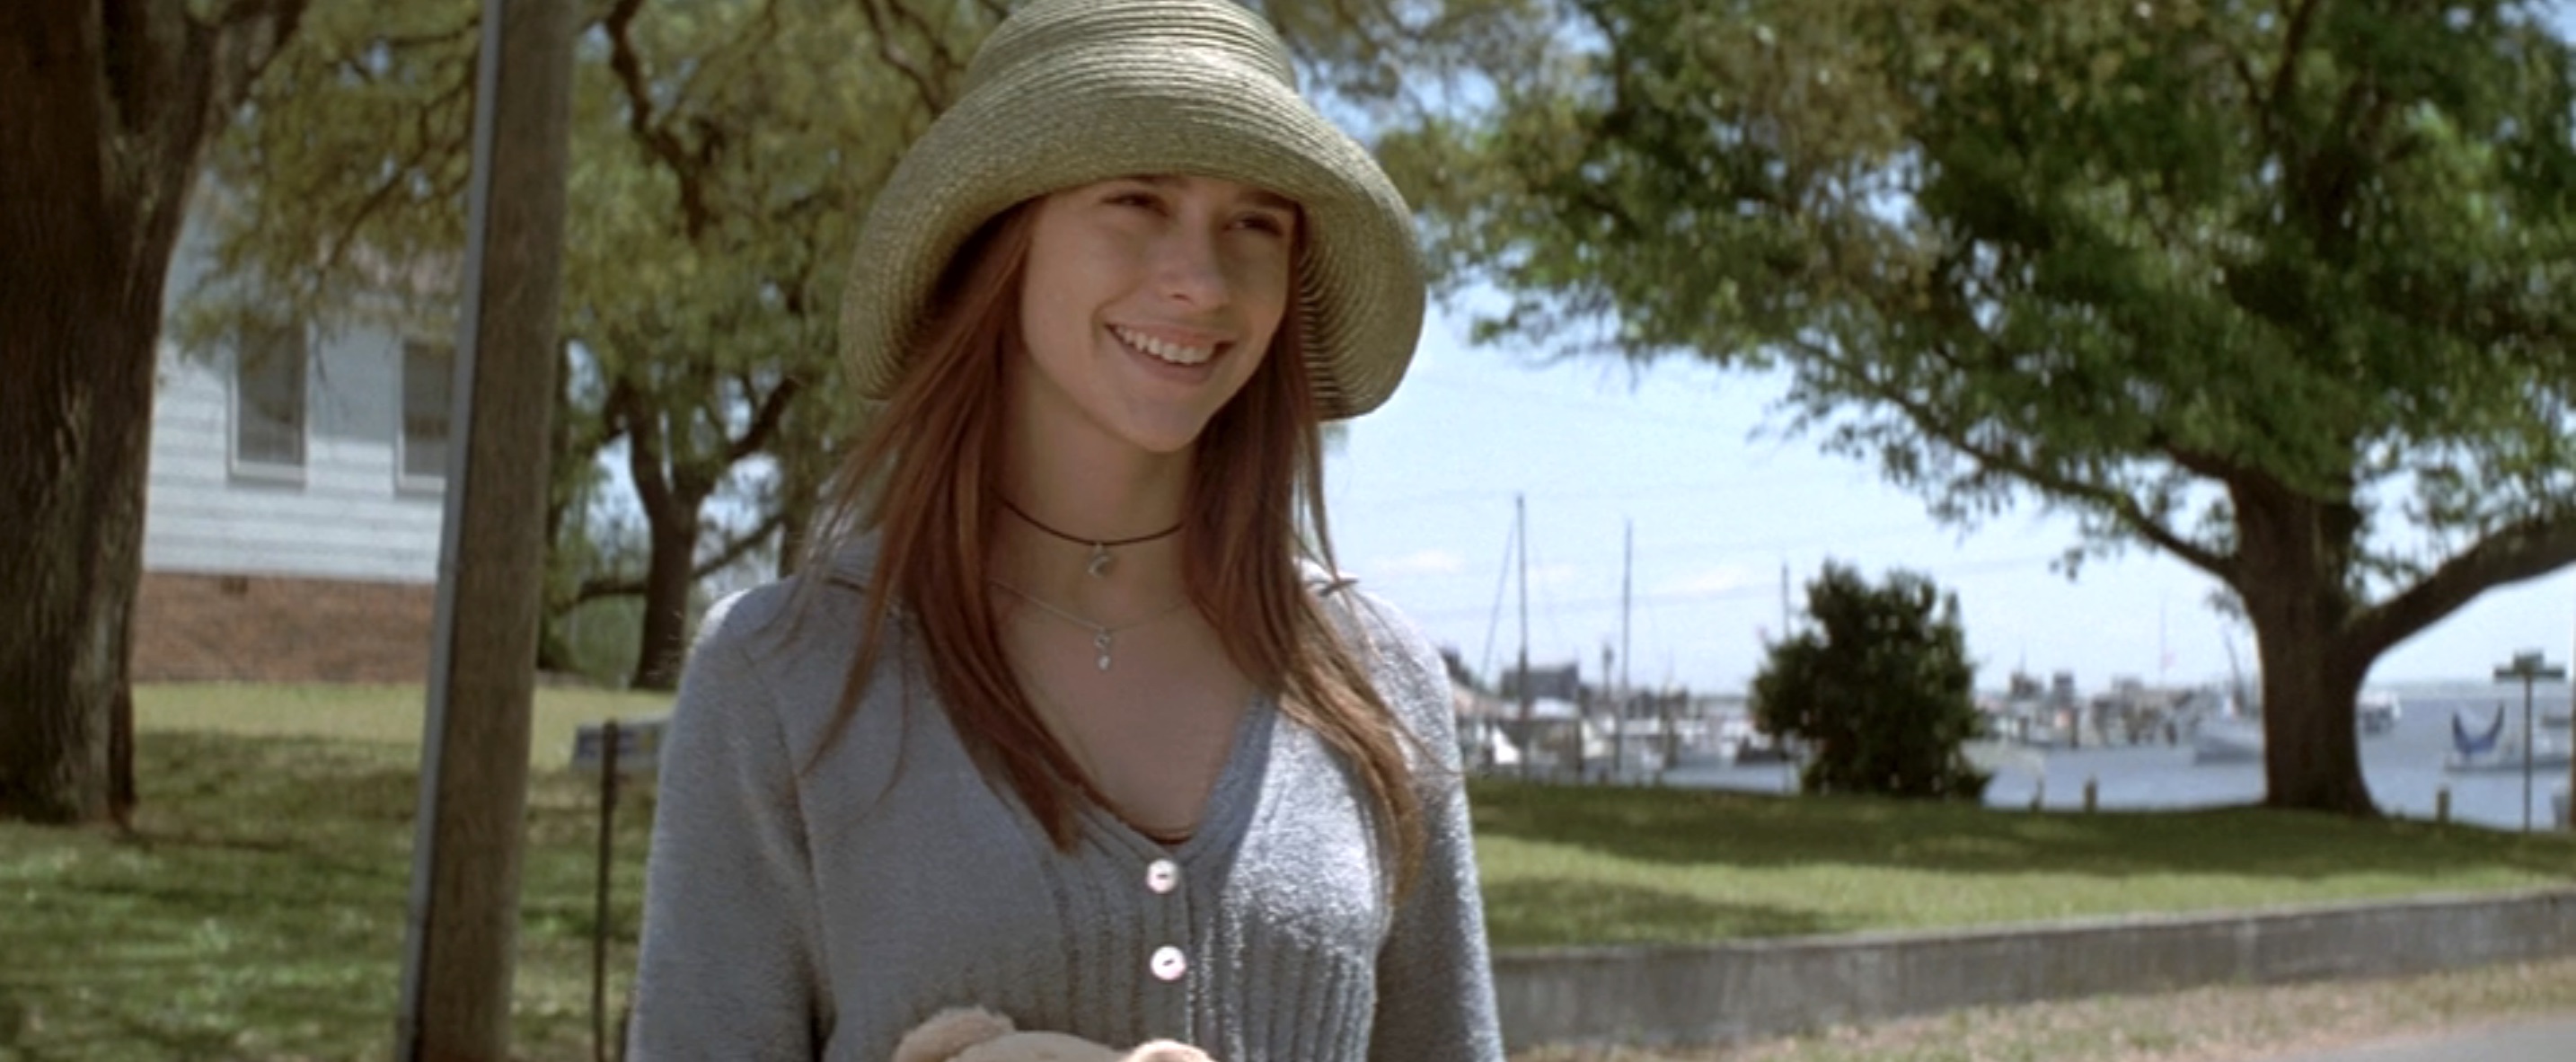 I Know What You Did Last Summer Cast - Jennifer Love Hewitt as Julie James